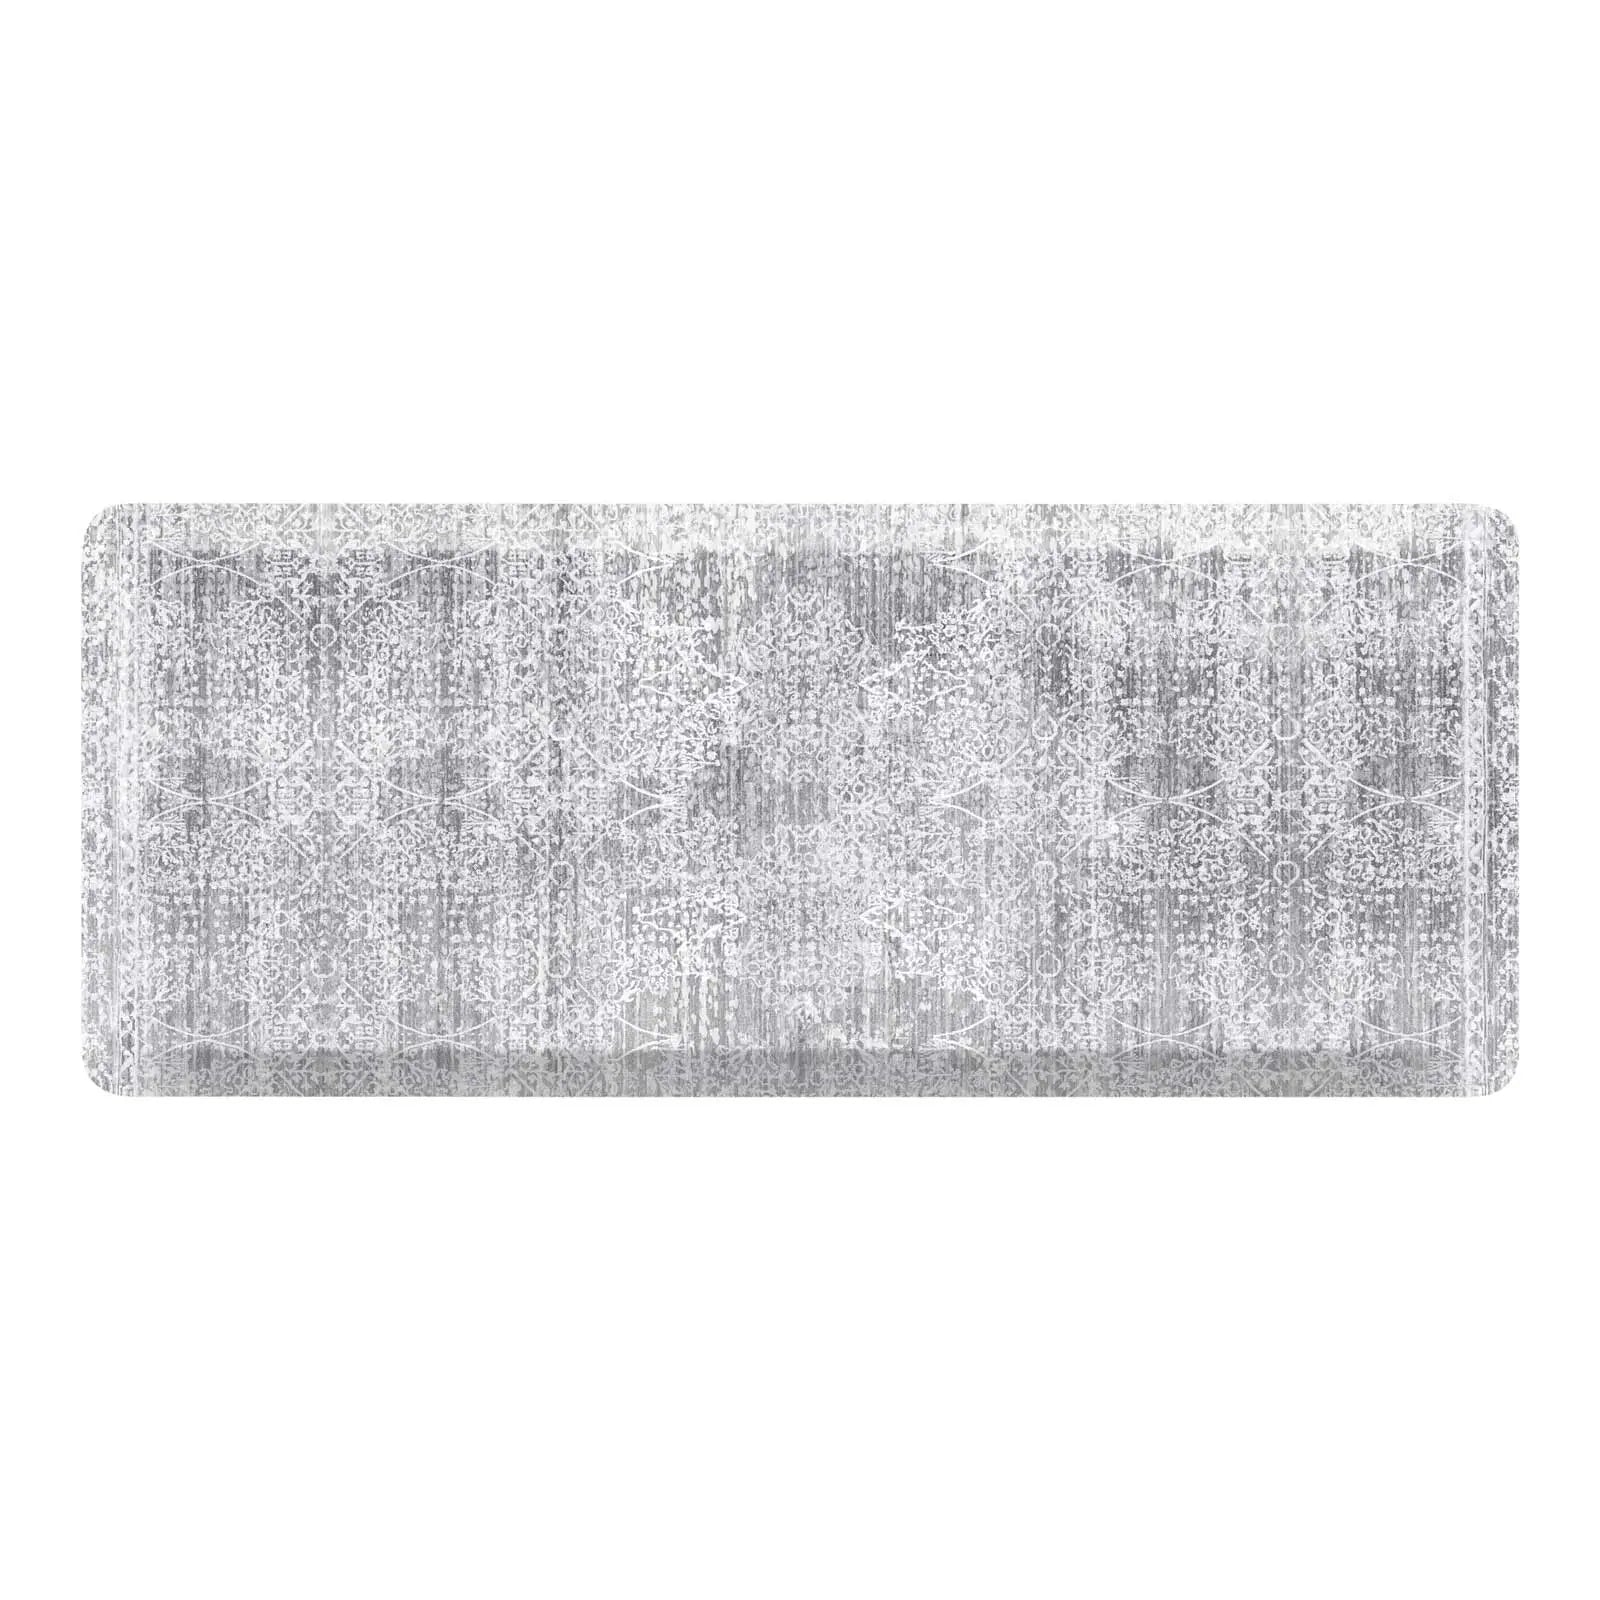 Gray neutral boho print kitchen mat shown in size 22x54